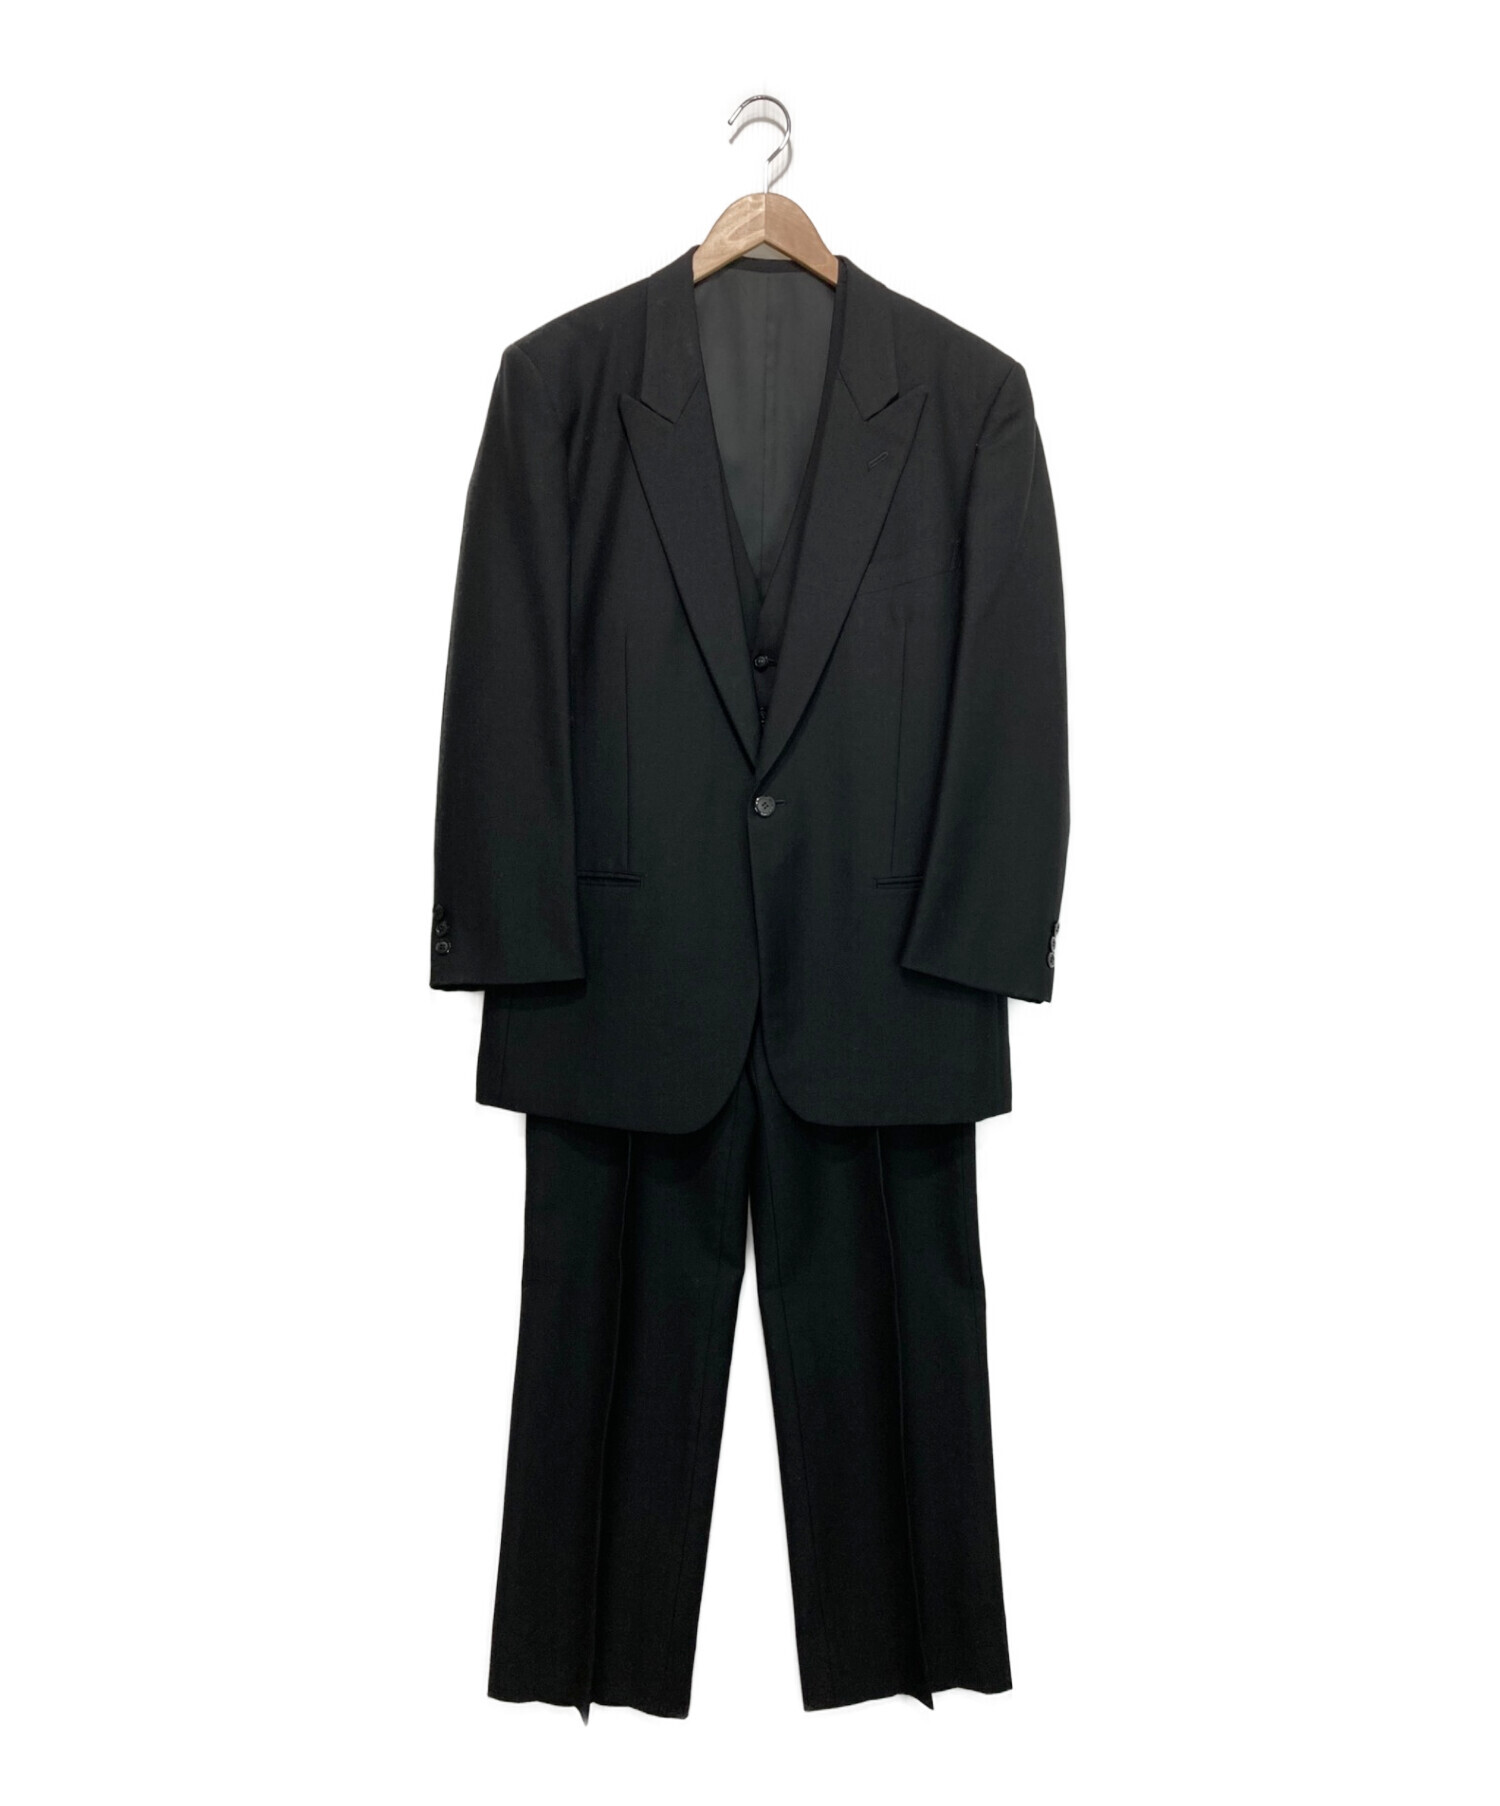 Yves Saint Laurent (イヴサンローラン) 3Pセットアップスーツ ブラック サイズ:C94 W82 T175